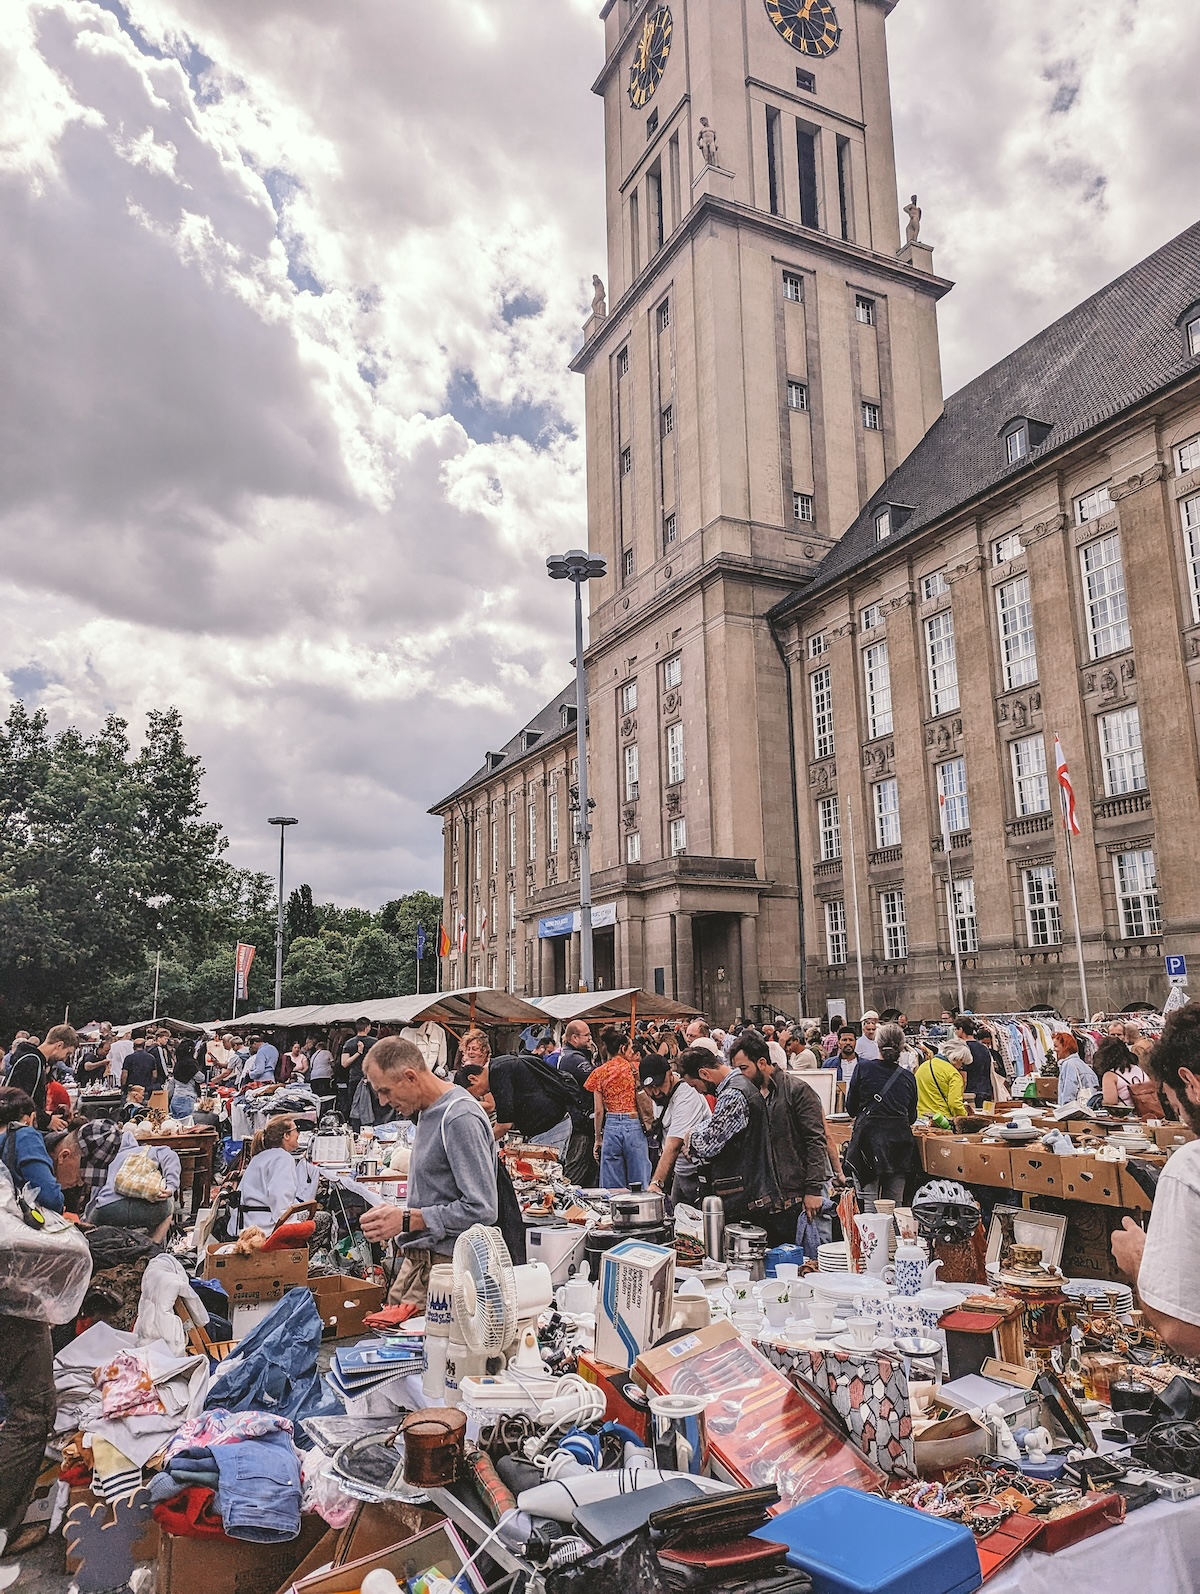 Flea market at Rathaus Schöneberg in Berlin.